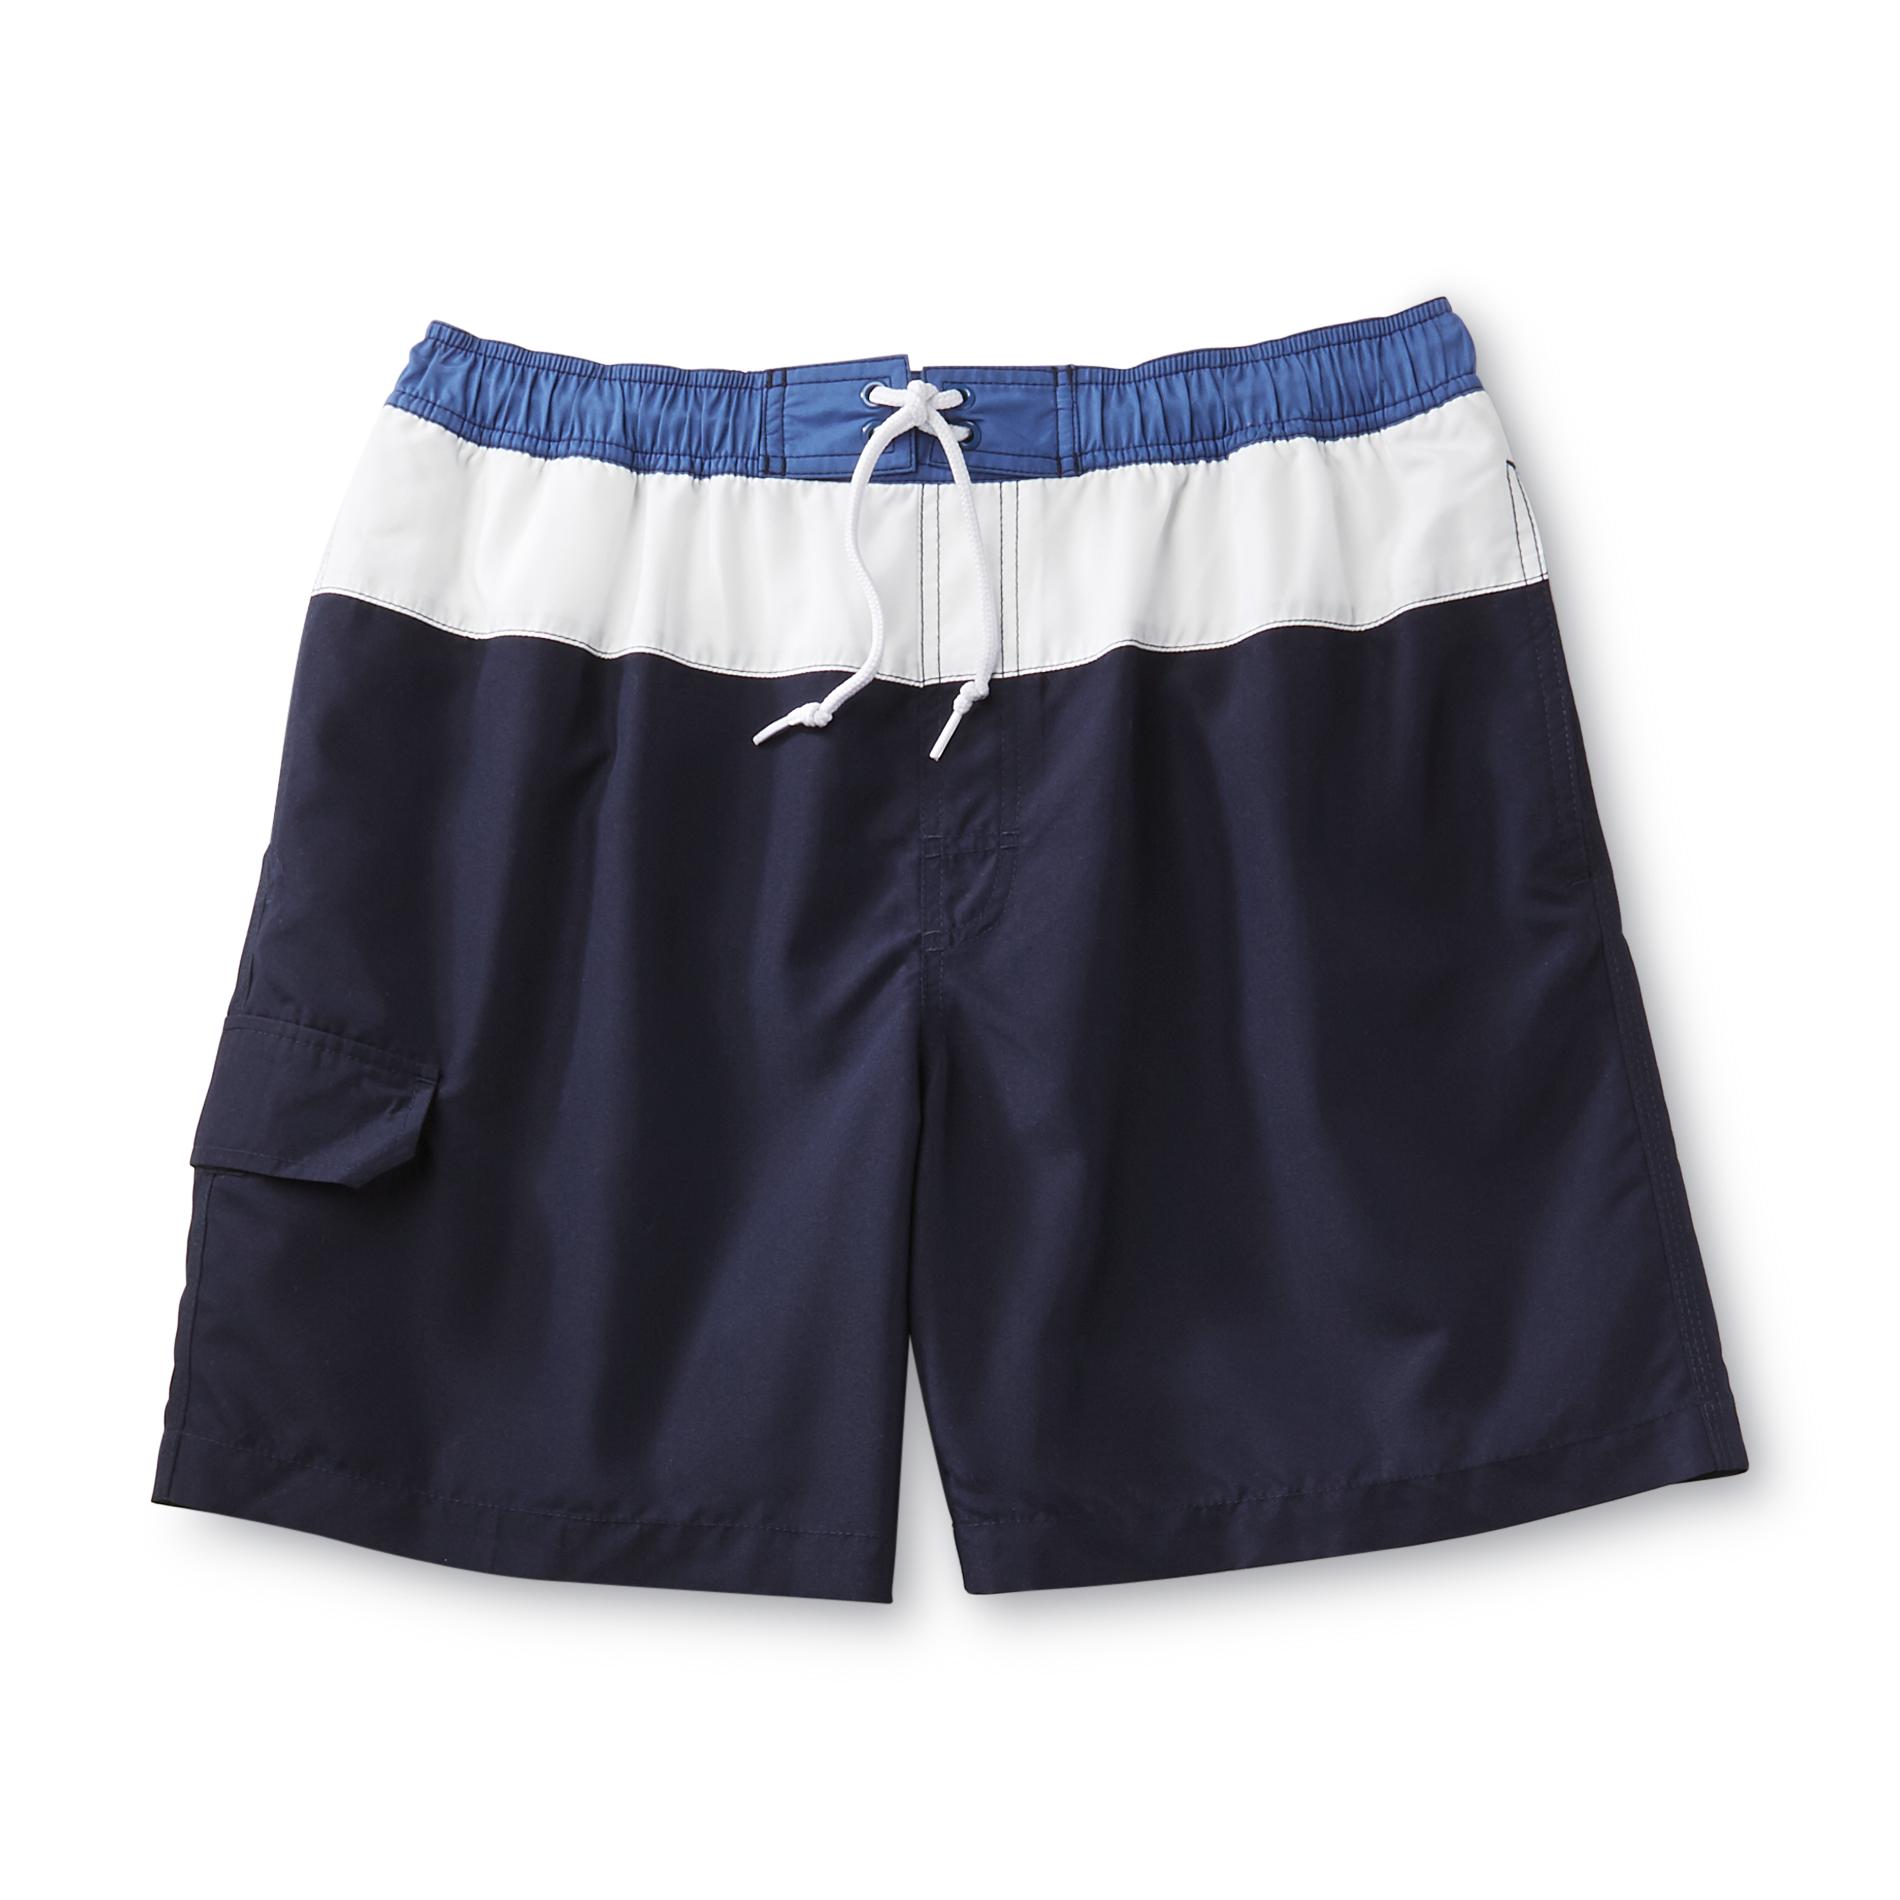 Islander Men's Swim Shorts - Striped